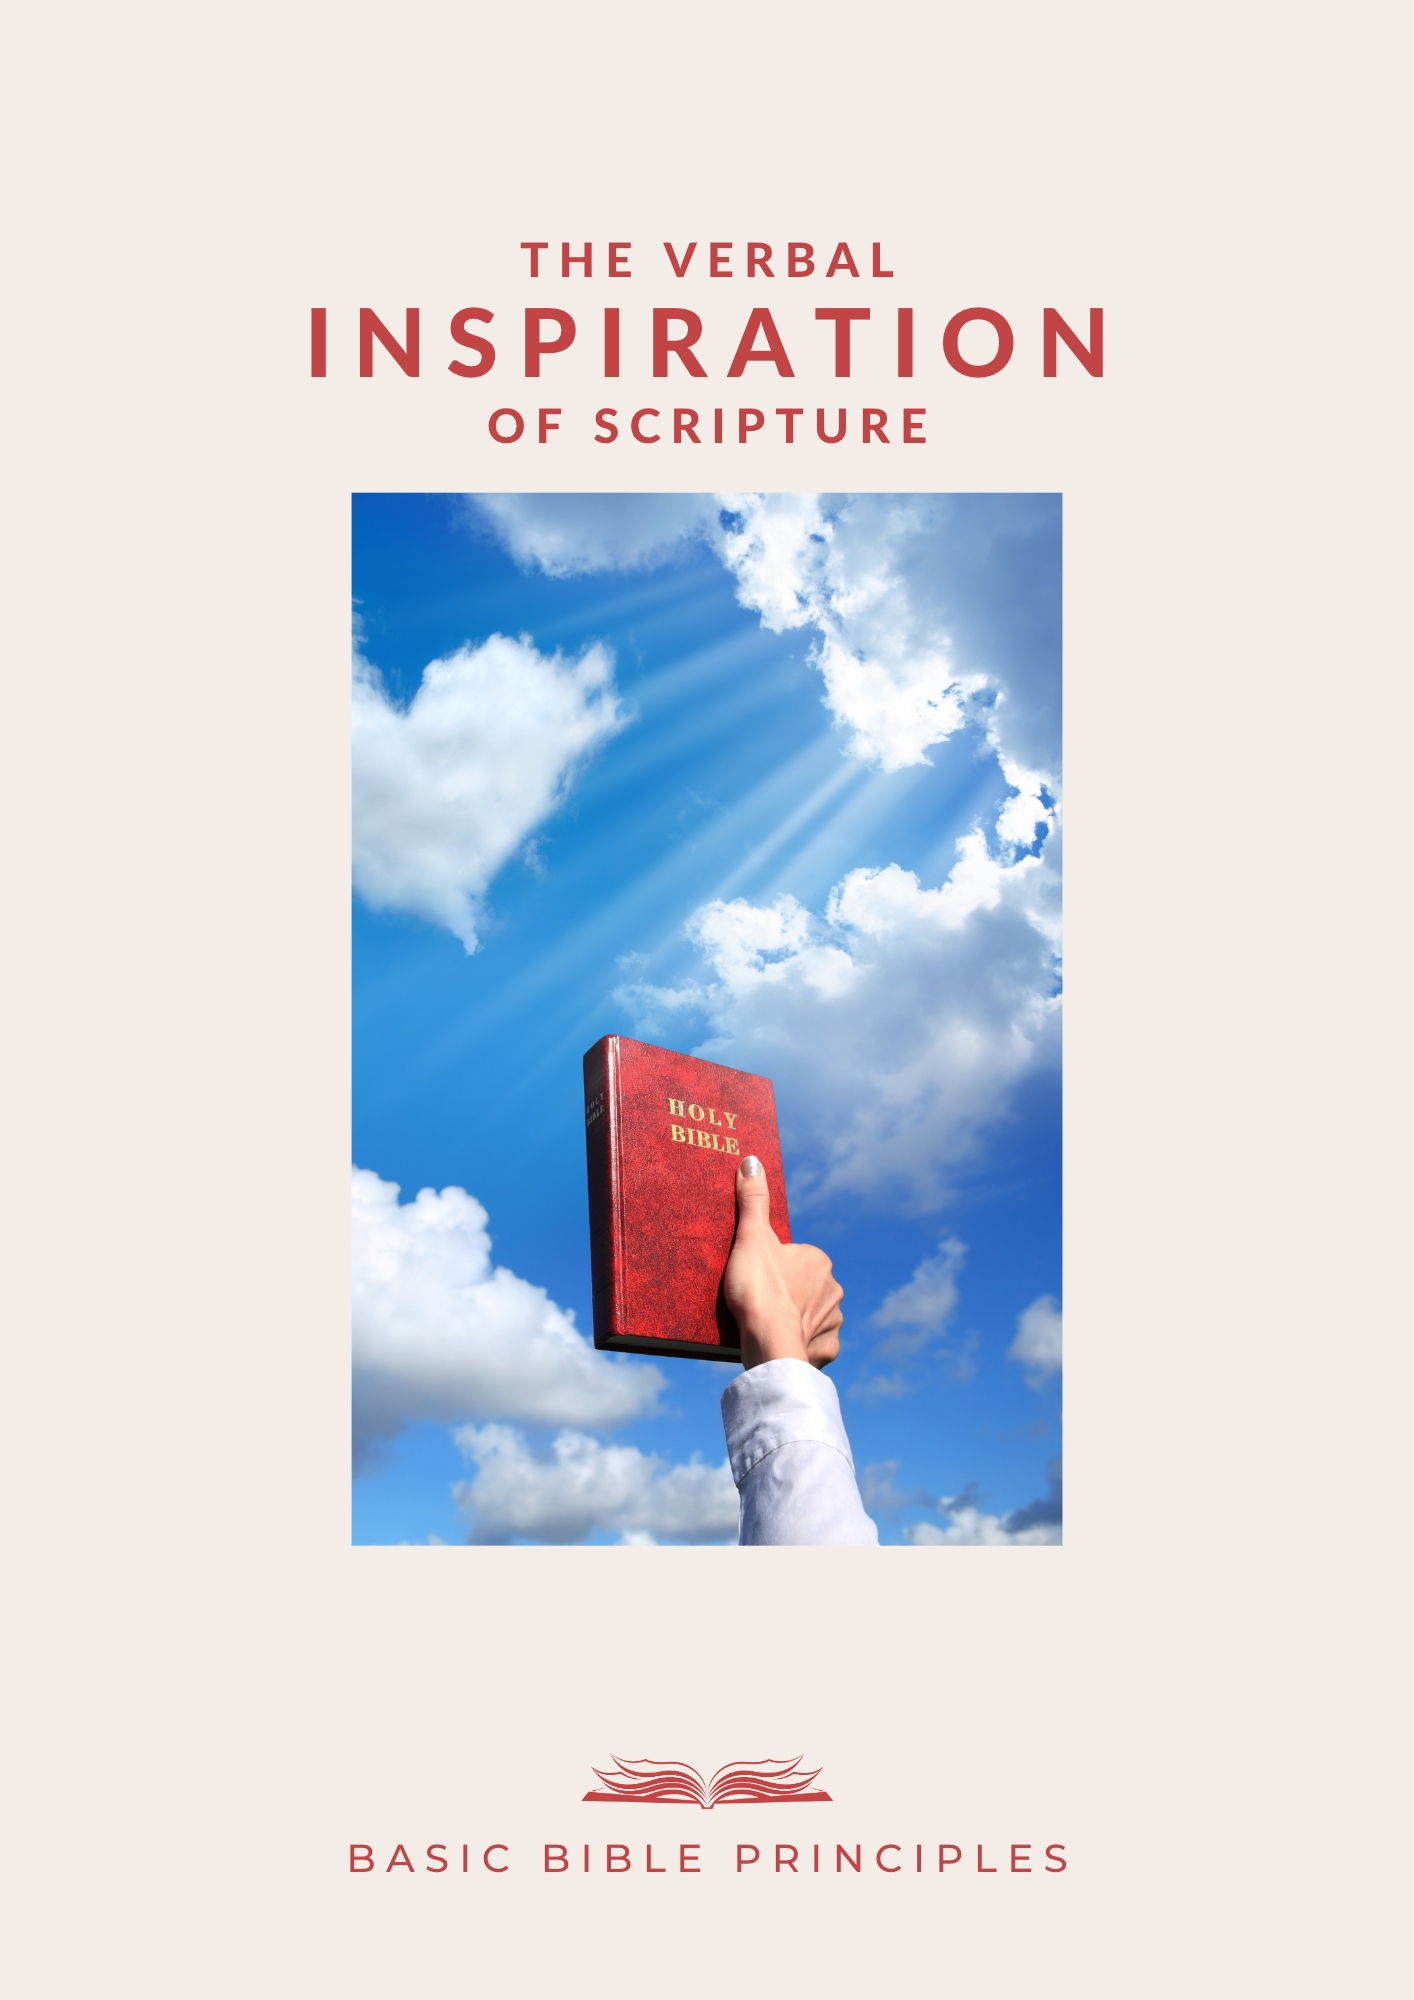 Basic Bible Principles: THE VERBAL INSPIRATION OF SCRIPTURE